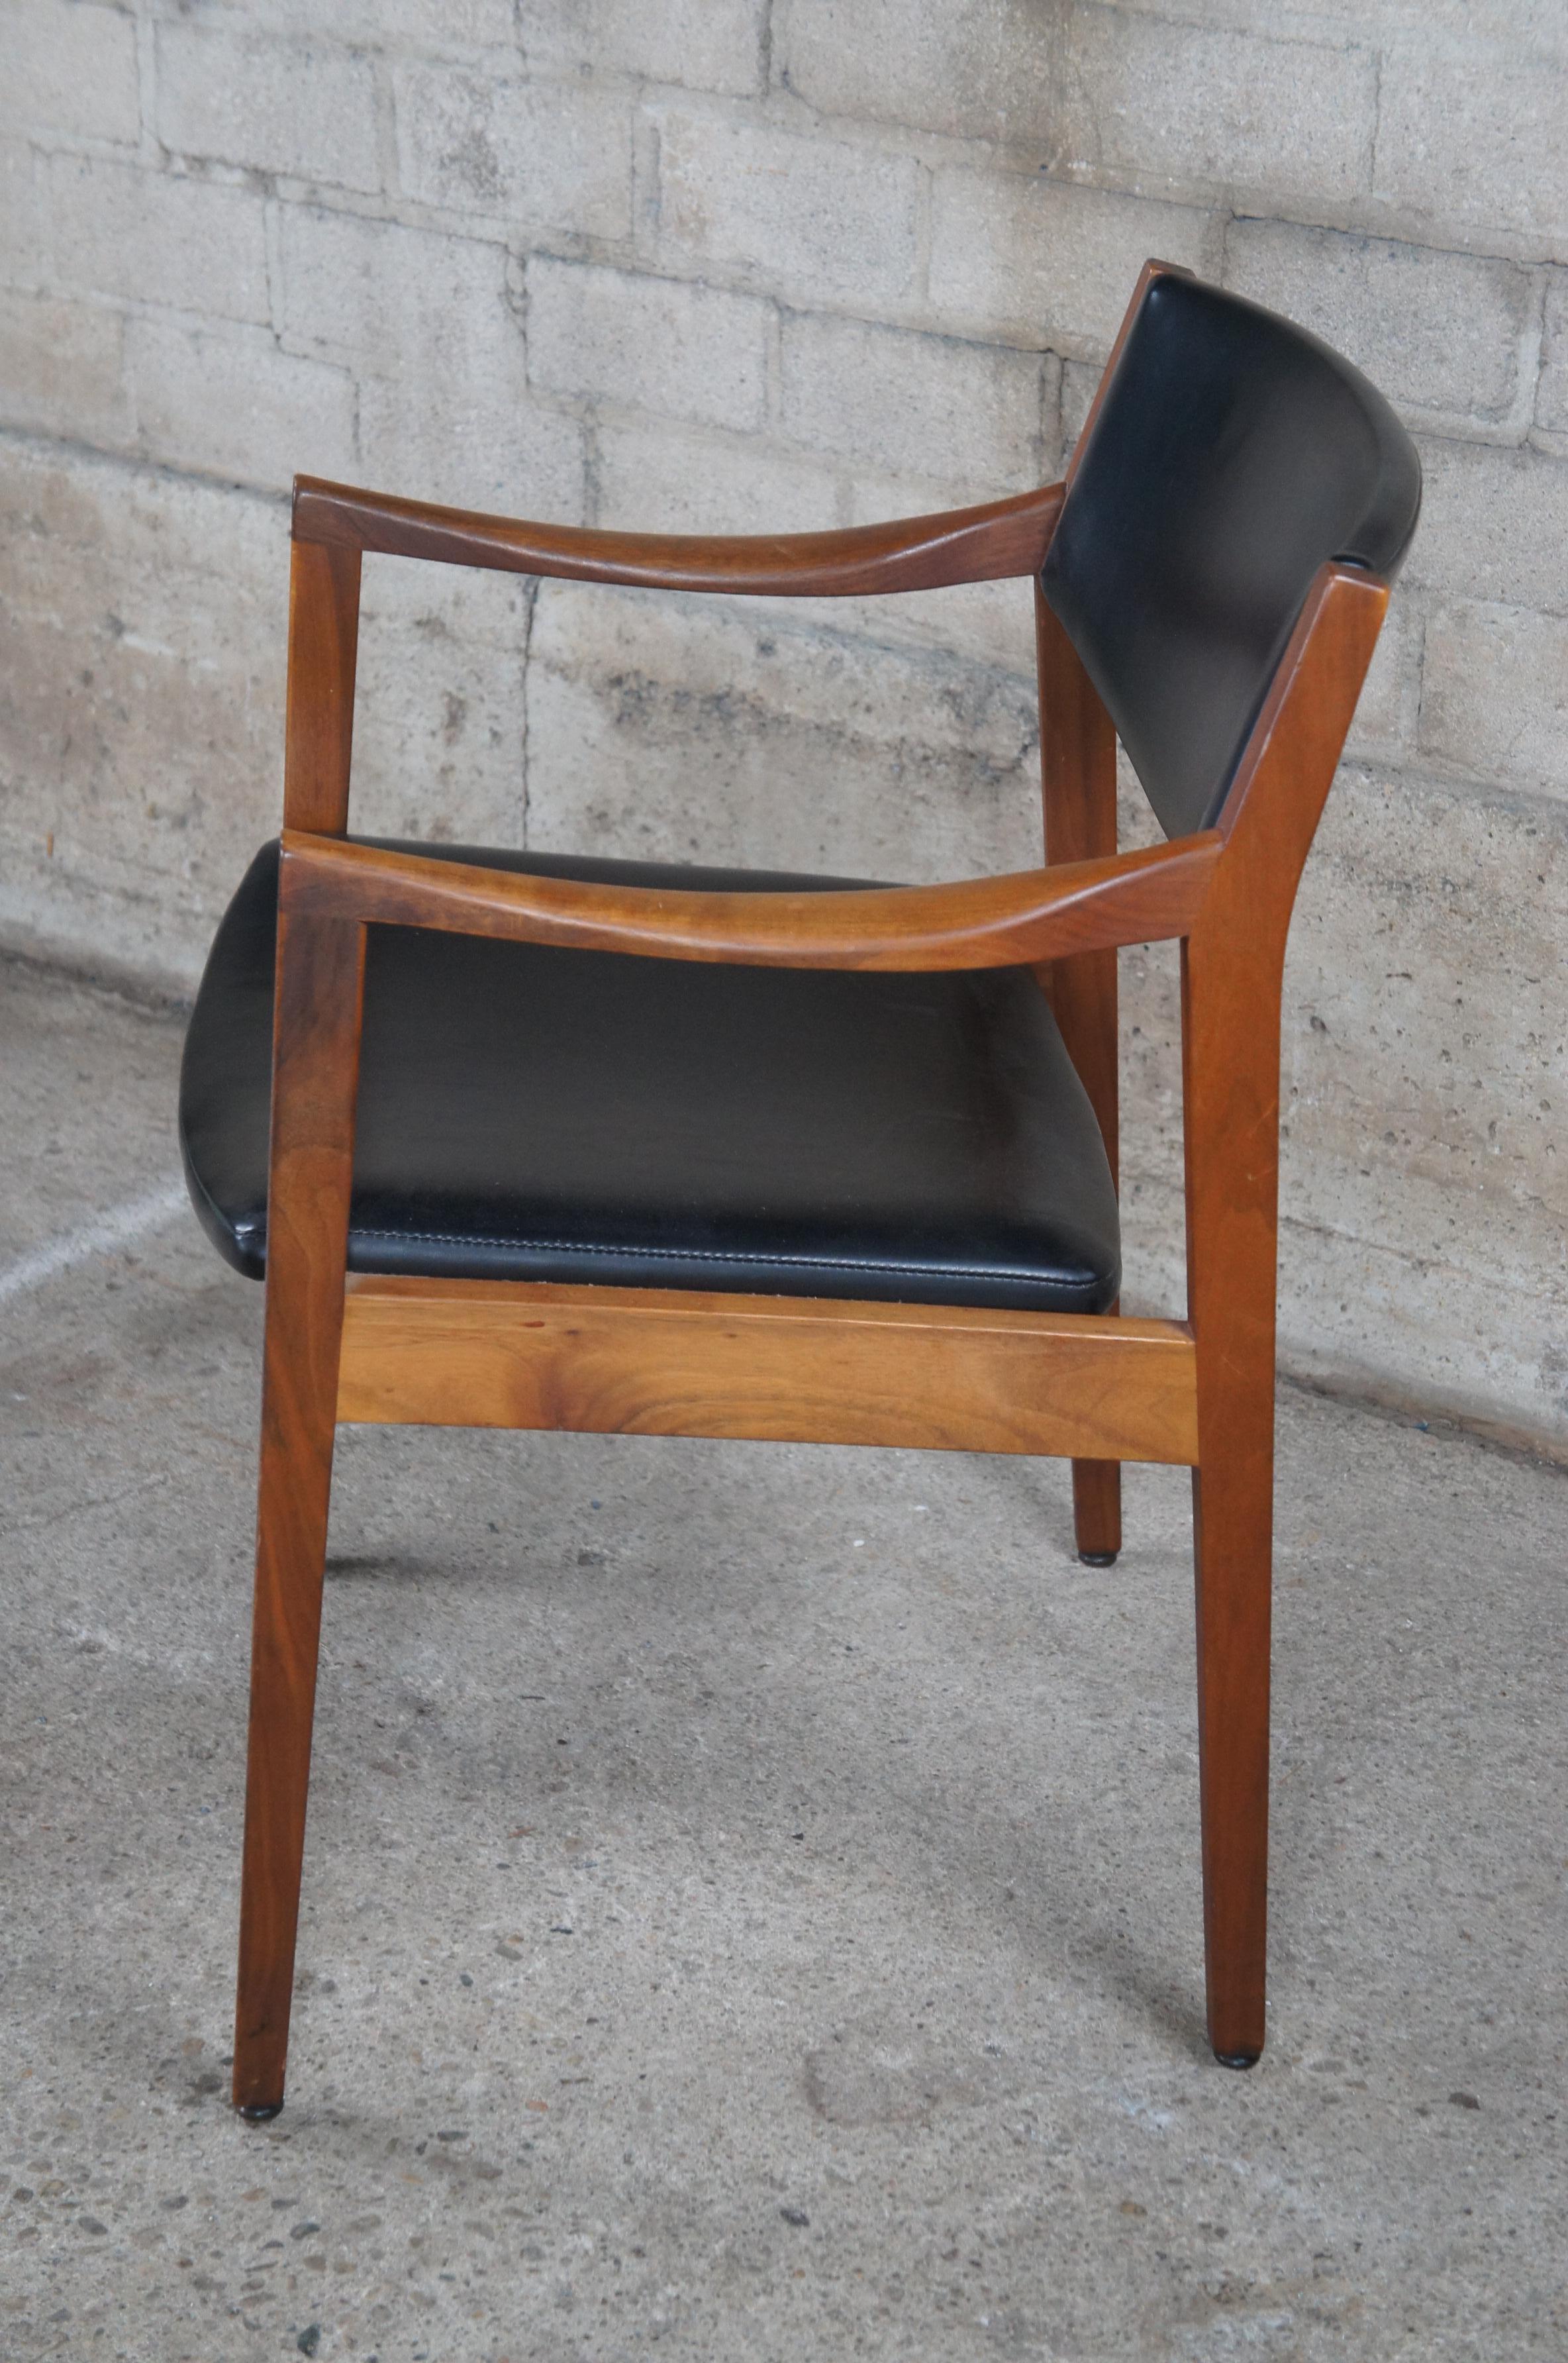 2 Gunlocke After Risom Mid Century Modern Danish Walnut & Leather Arms Chairs  For Sale 2